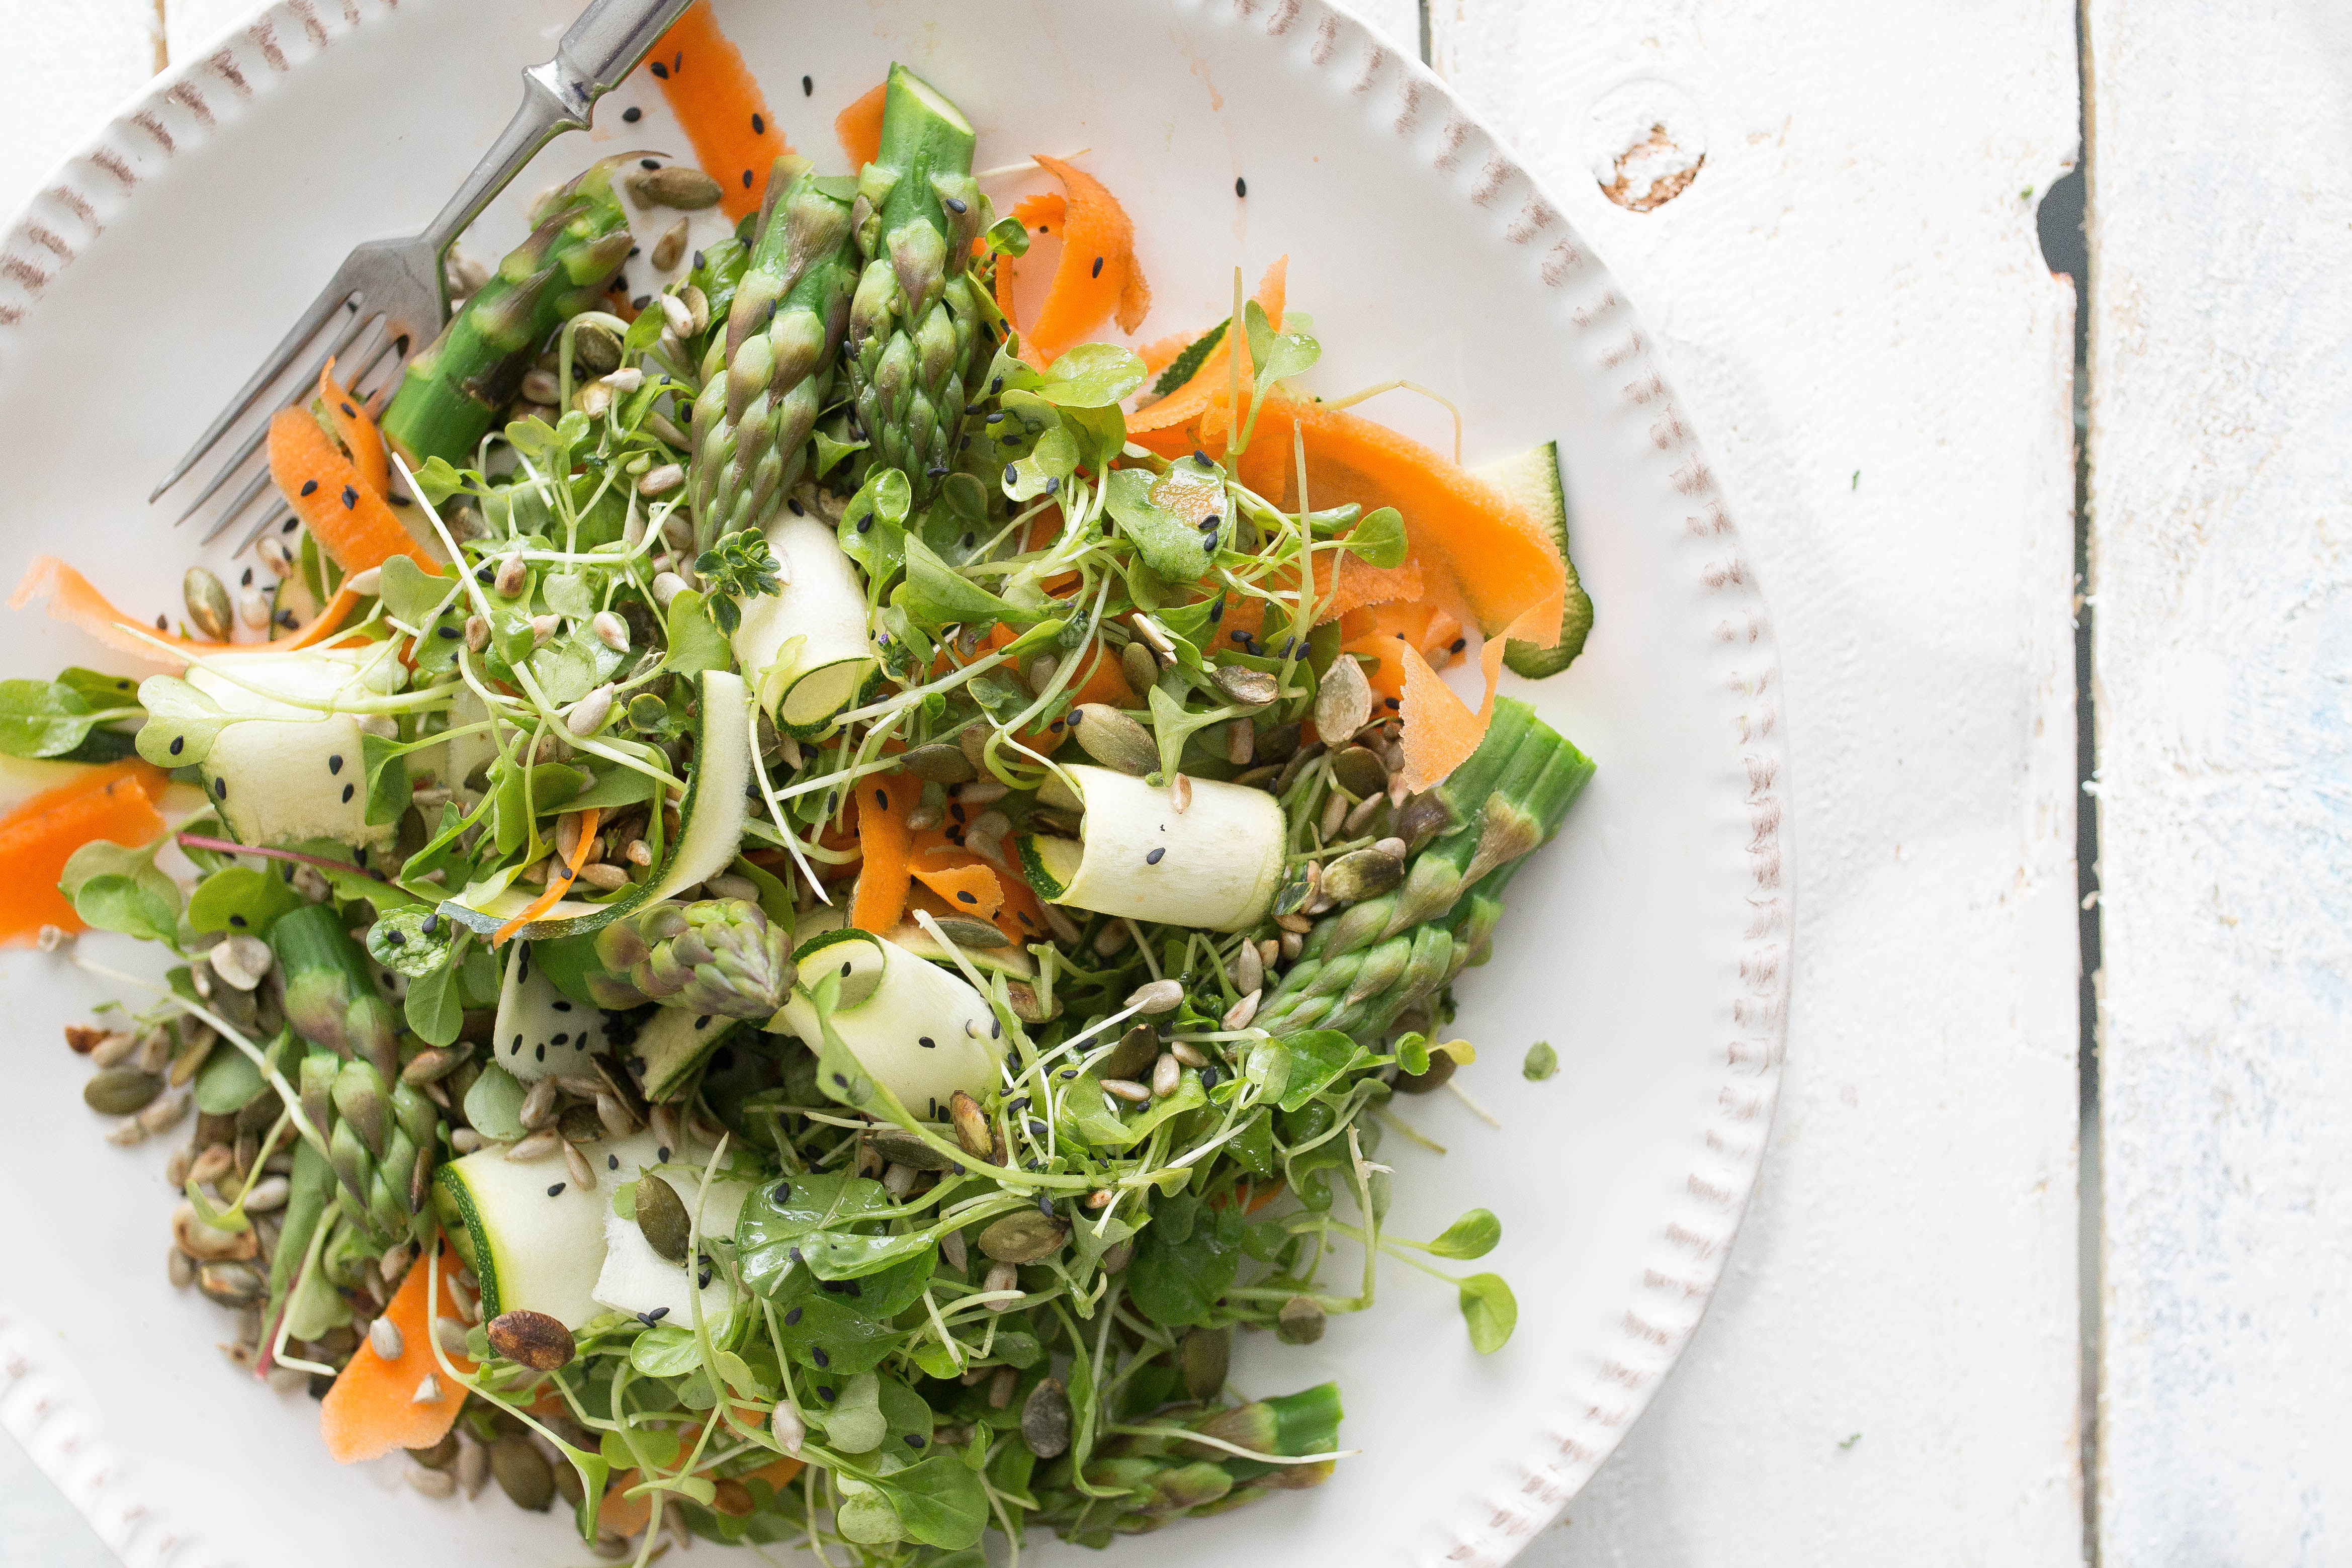 Healthy Vegetable Salad